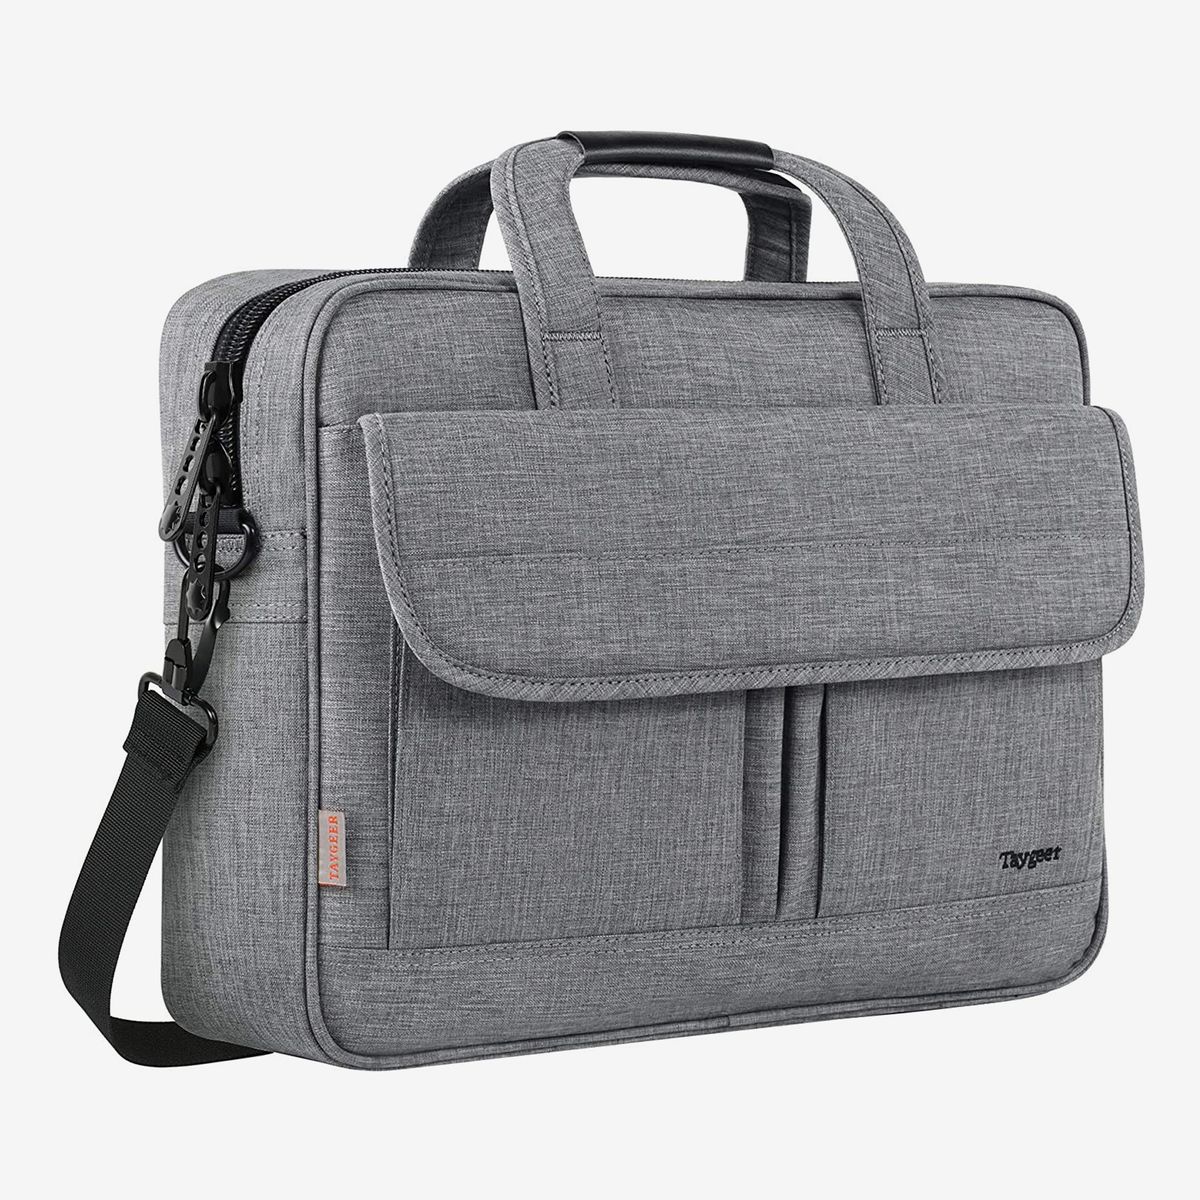 Techecho Mens Messenger Bag Mens Shoulder Crossbody Leather Bag Working Bag for Business School Gray Color : Brown, Size : M 